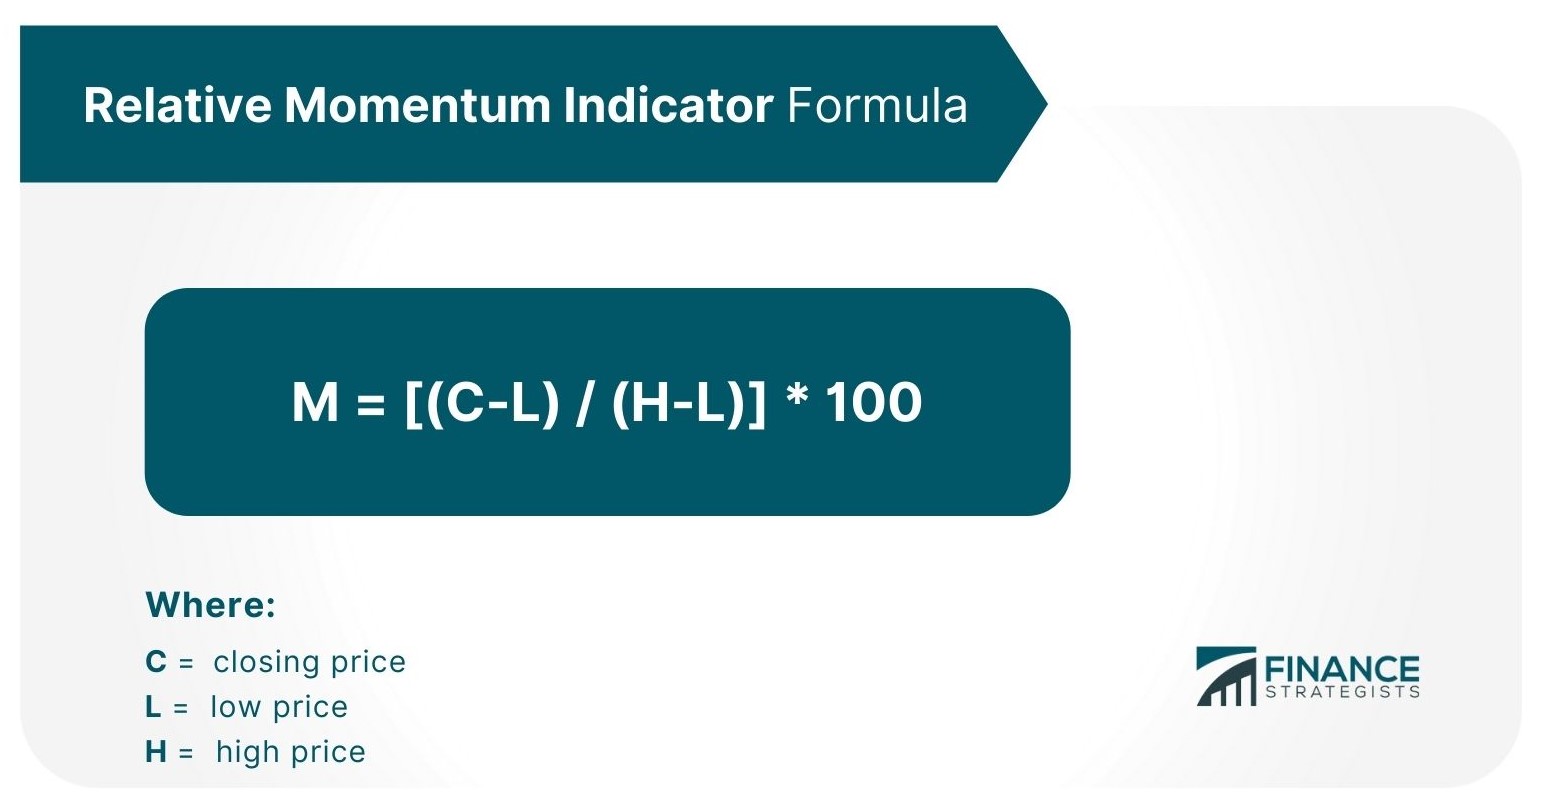 excel formula for squeeze momentum indicator